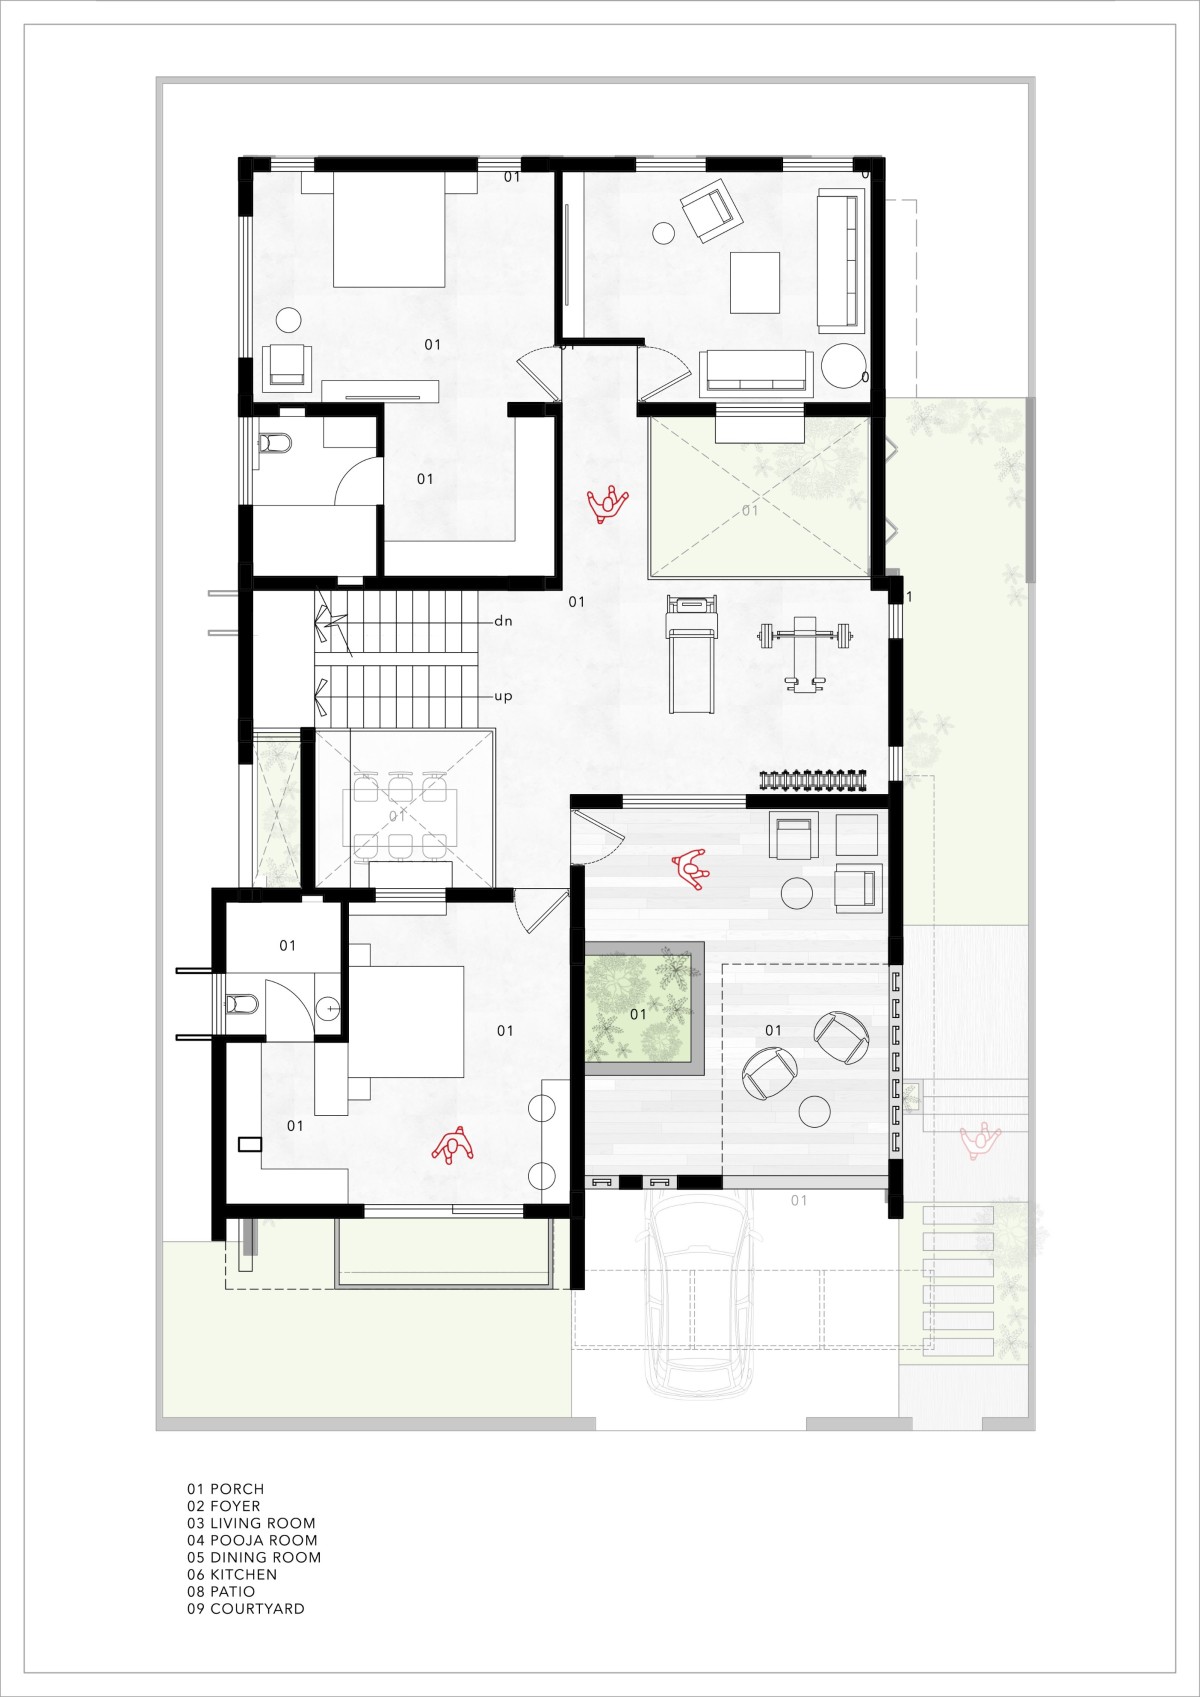 First Floor Plan of Neralu by Jalihal Associates